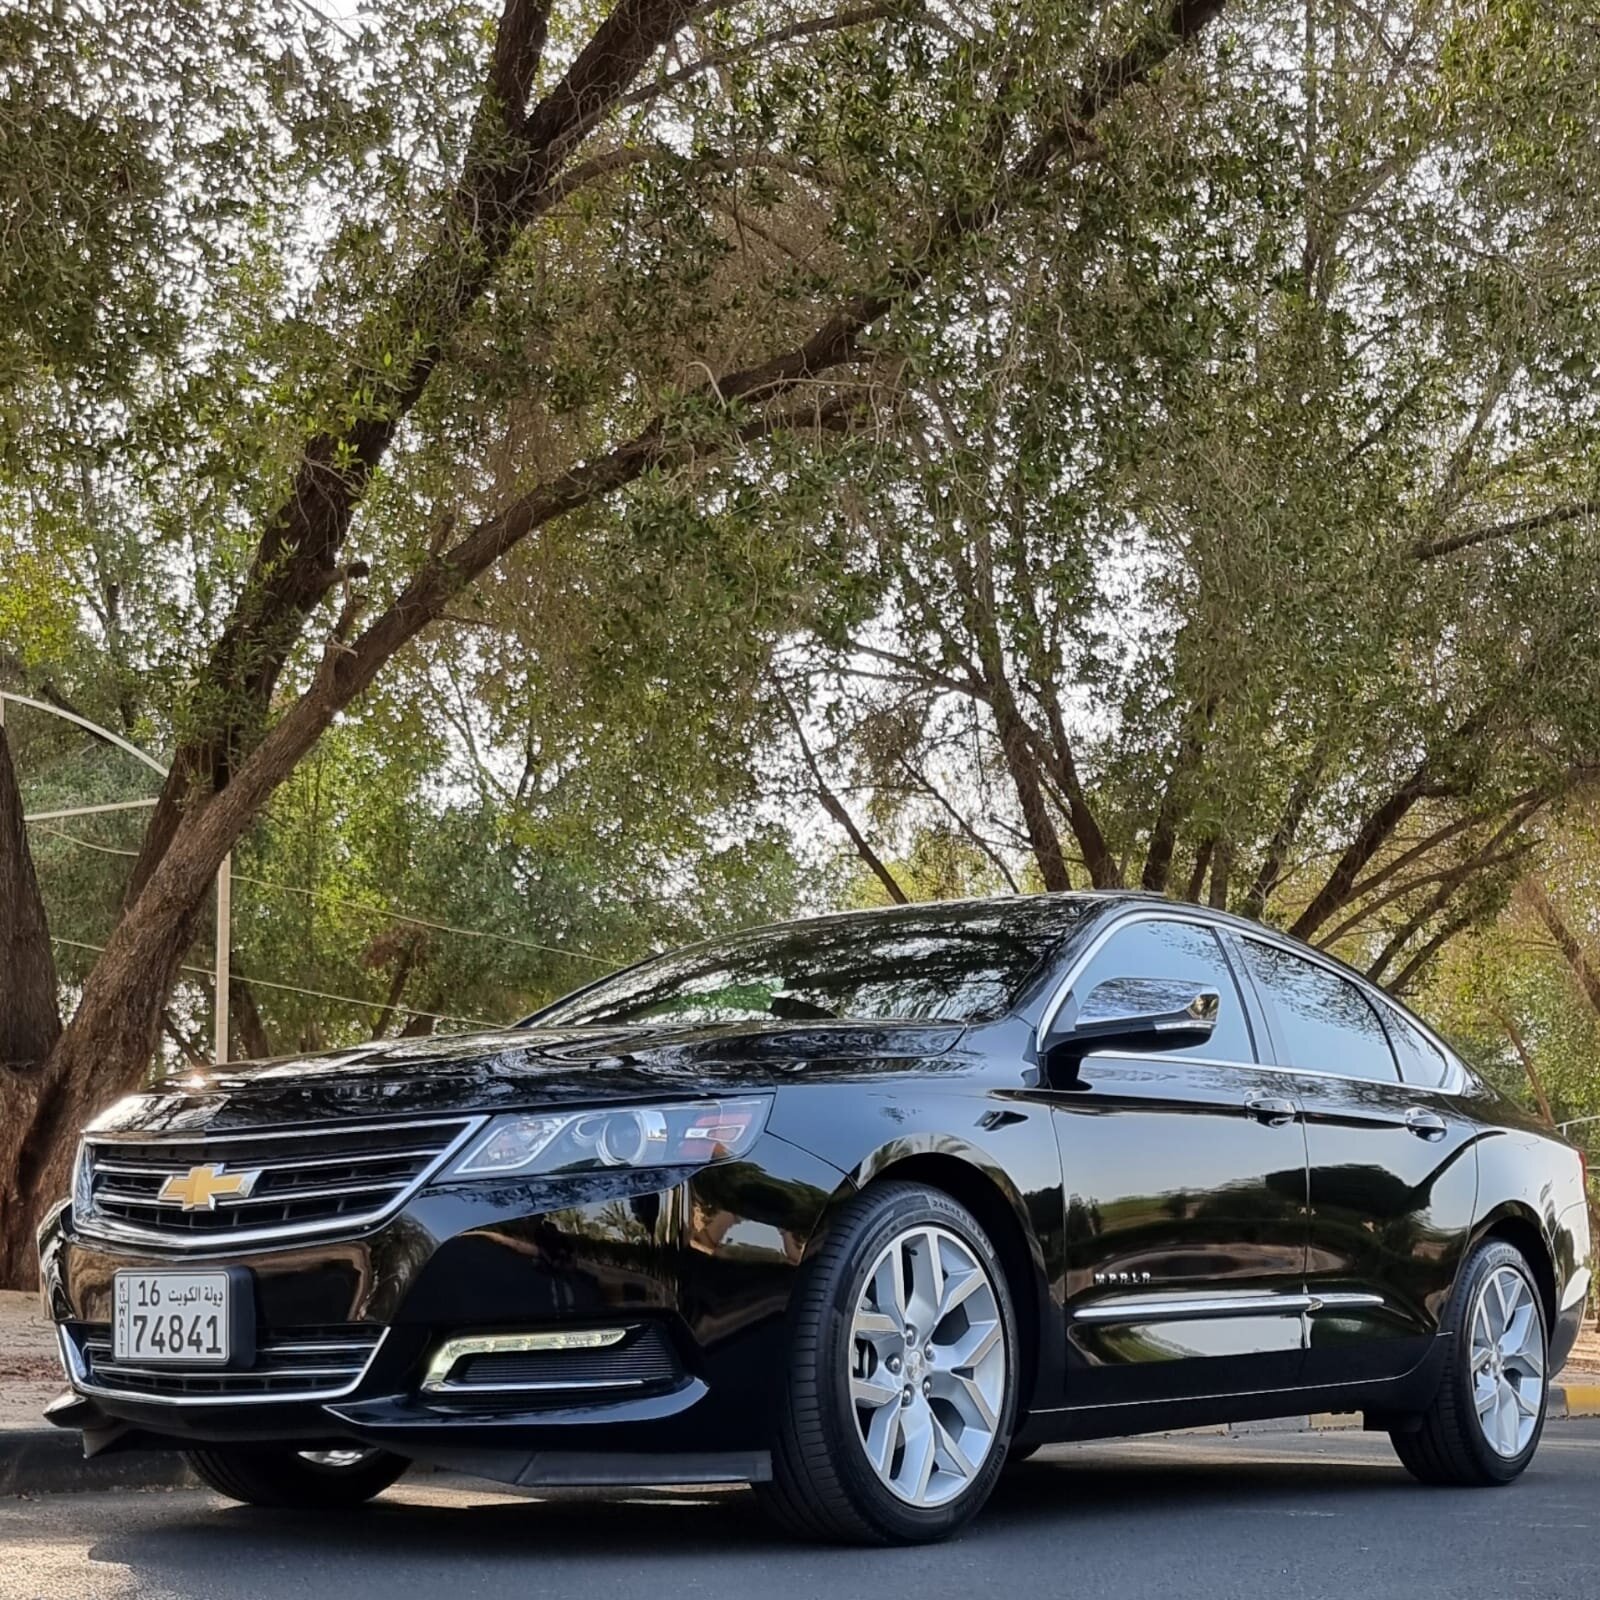 Chevrolet impala 2019 شفروليه امبالا ٢٠١٩1.jpeg